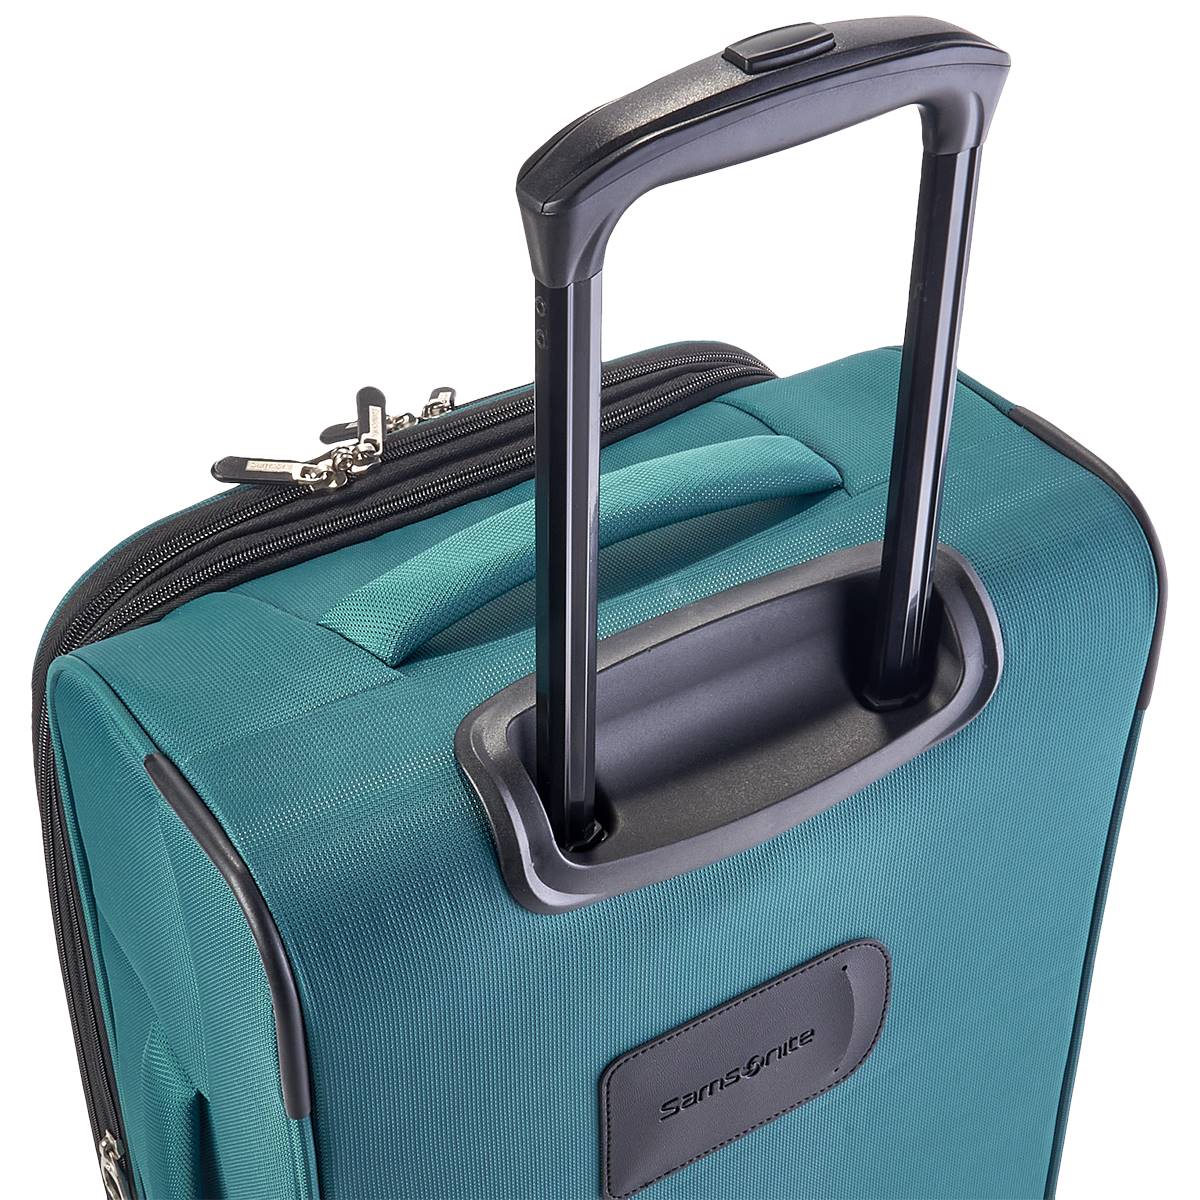 Samsonite Crusair LTE 21in. Carry-On Spinner Luggage